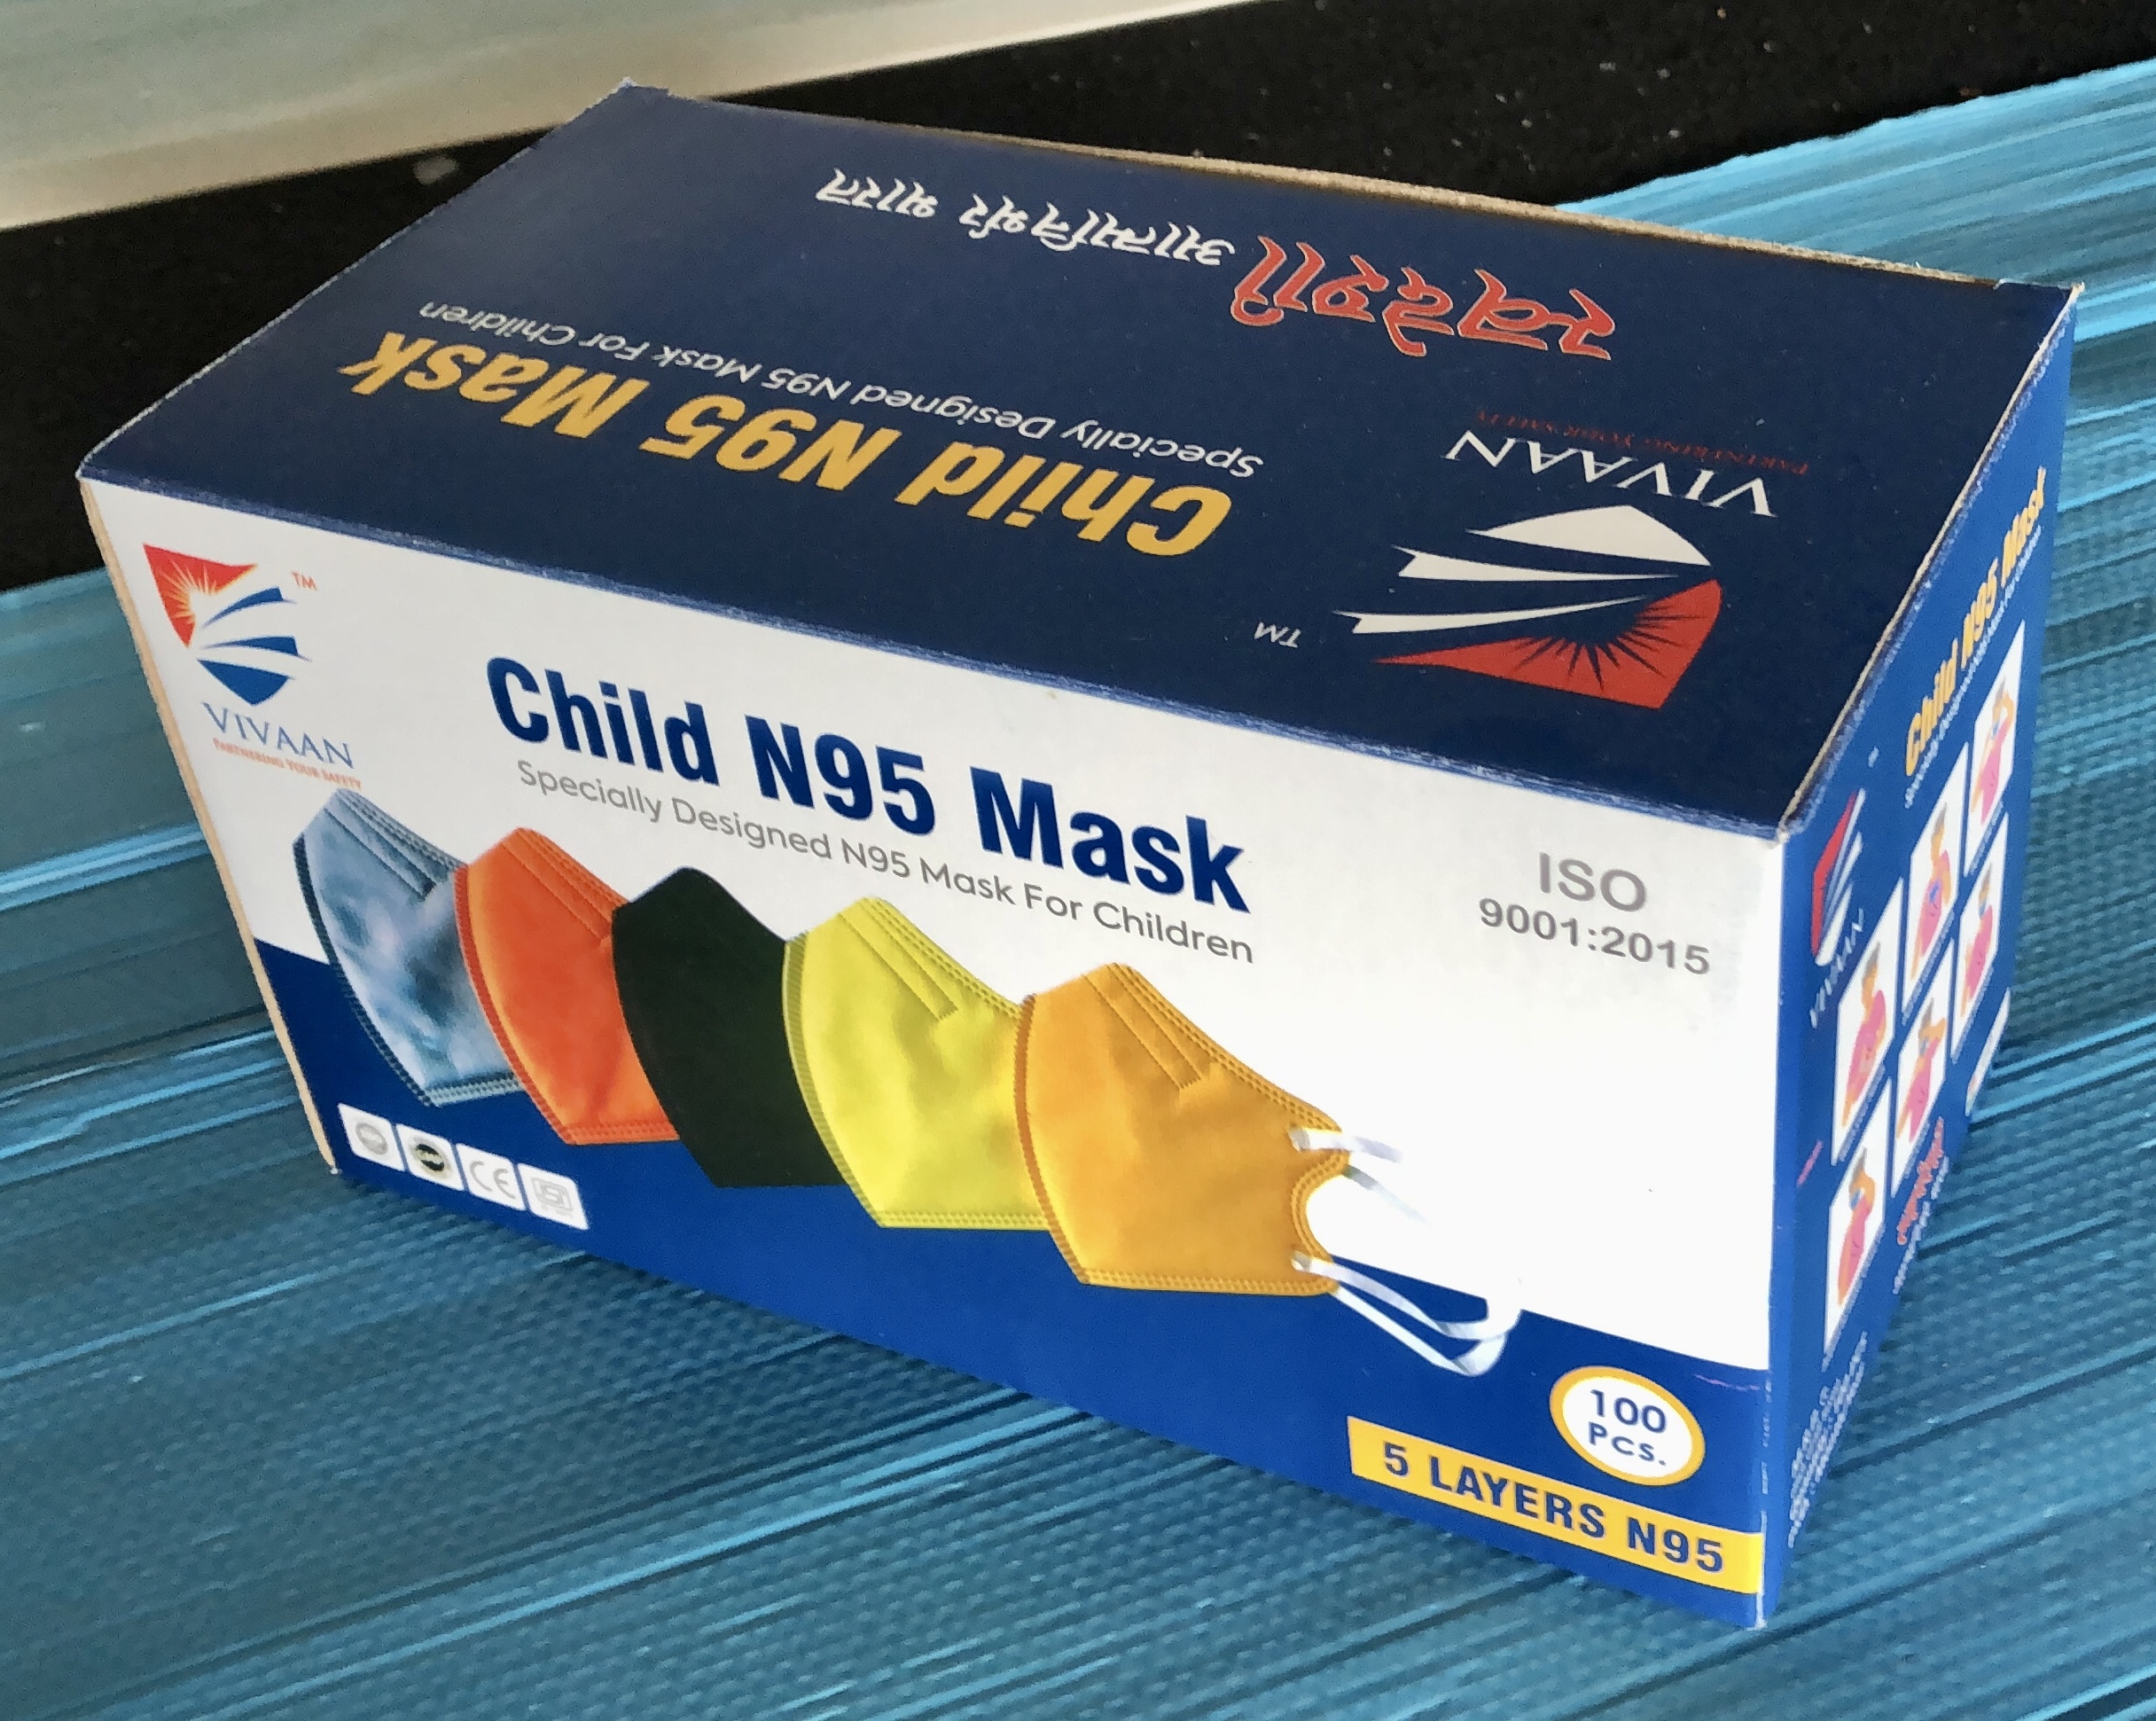 Child N95 Mask